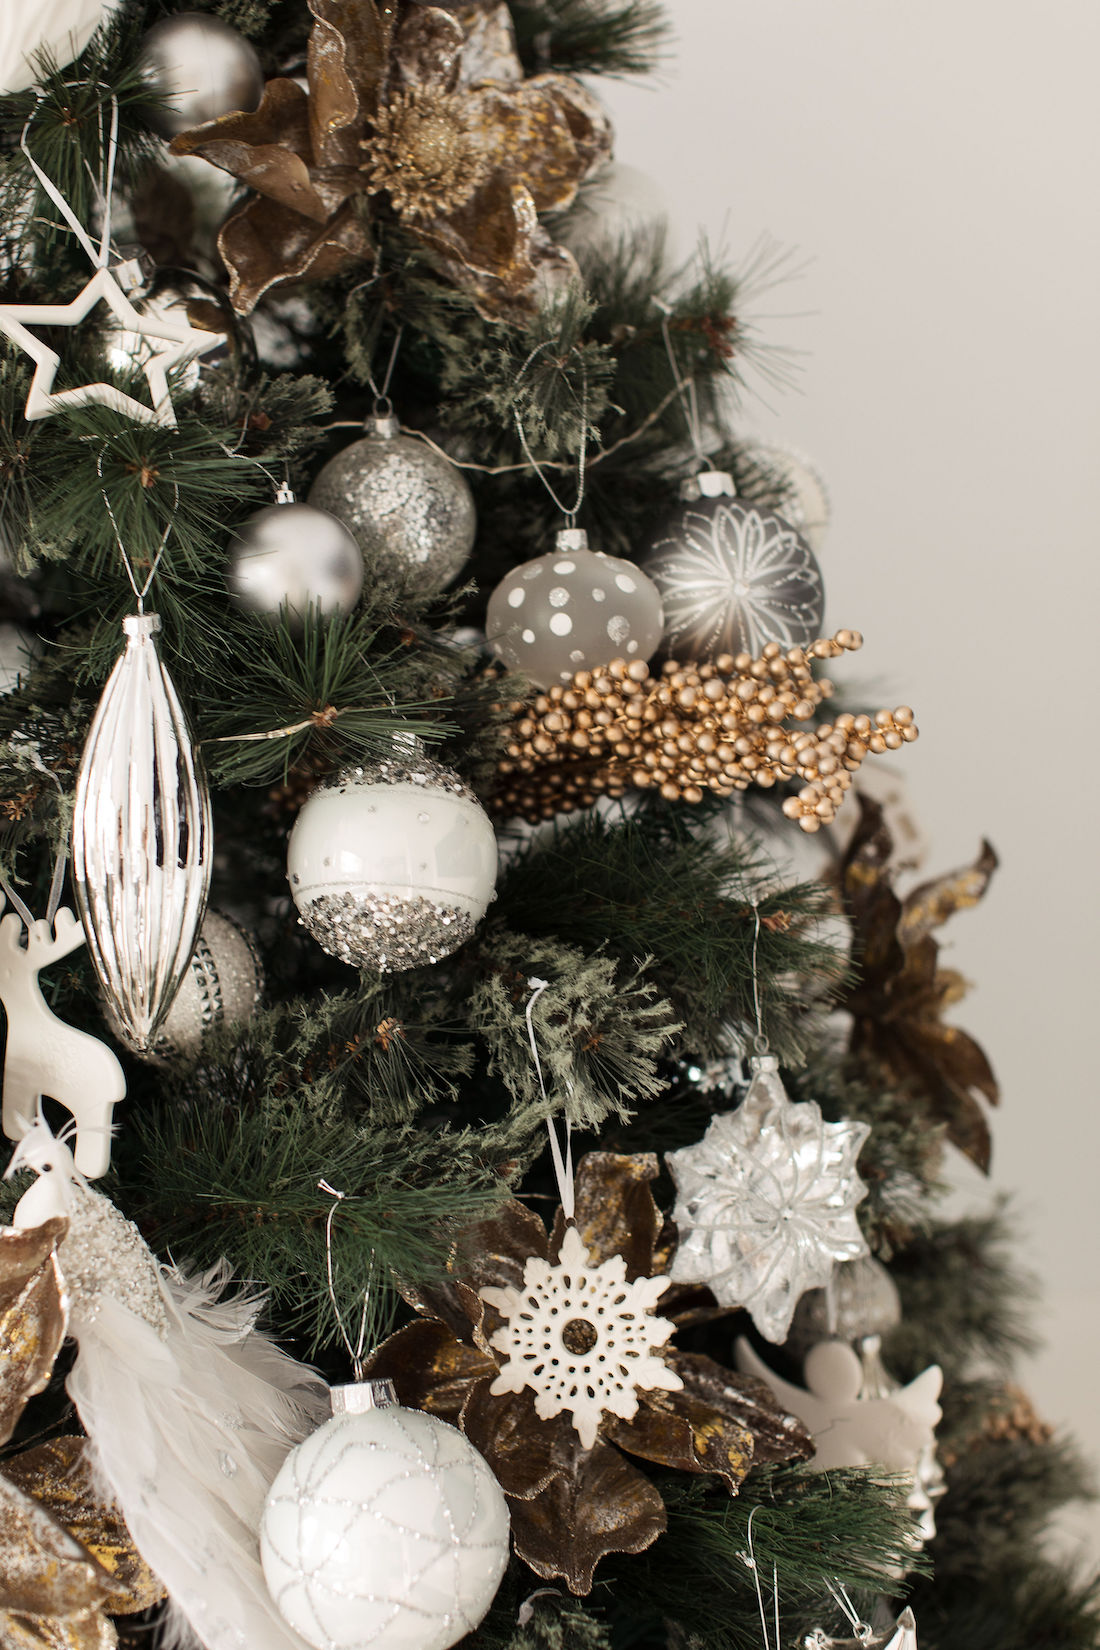 Gina's Christmas tree and her top Christmas tree styling tips